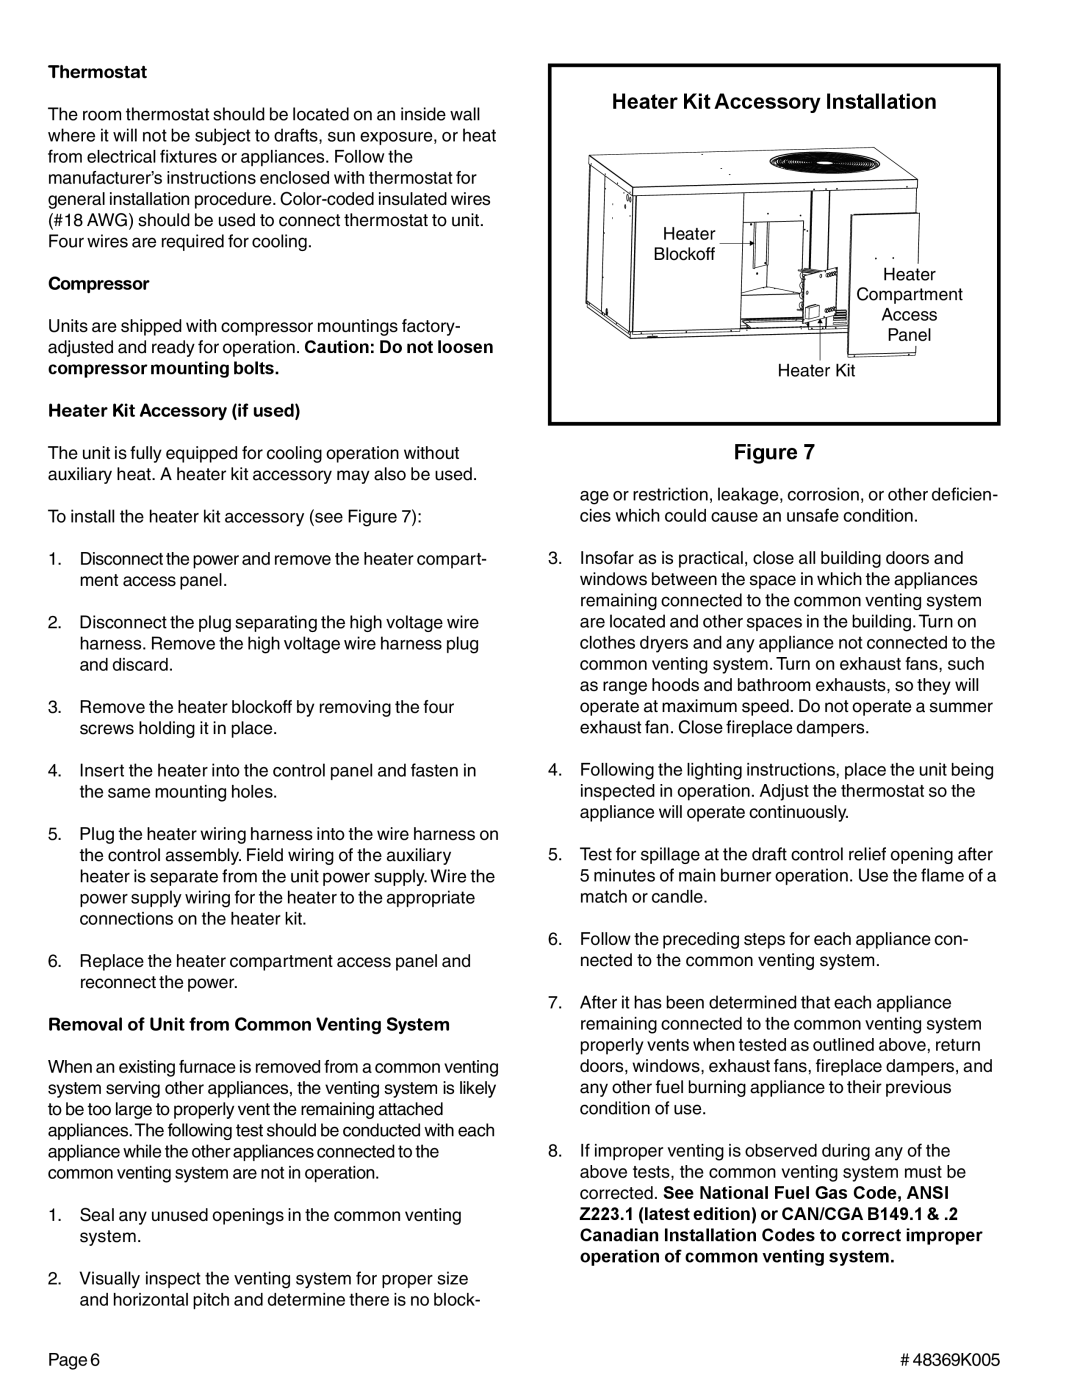 Ducane (HVAC) (2/4)SH13 warranty Heater Kit Accessory Installation, Thermostat, Compressor, Heater Kit Accessory if used 